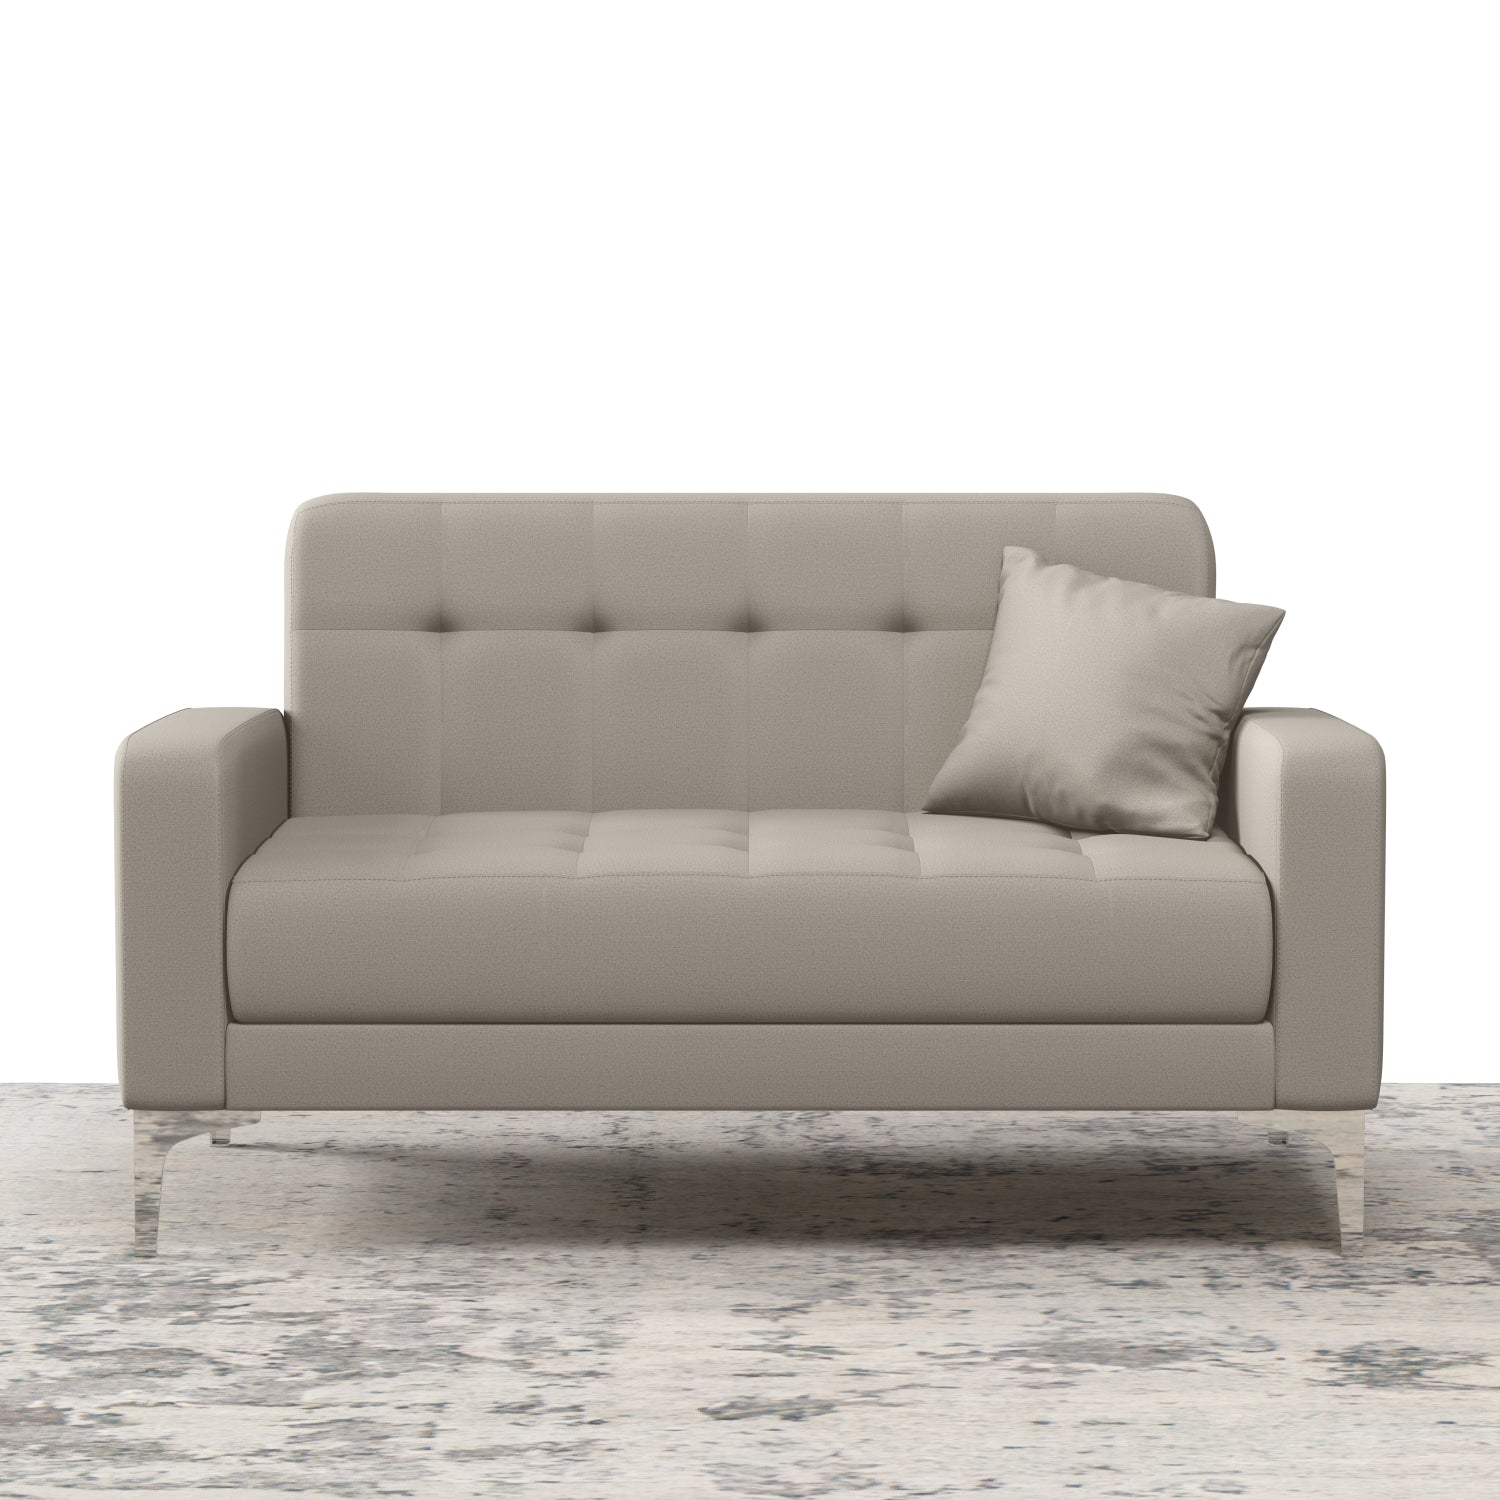 ViscoLogic Bella Forward Fashion Mid-Century Tufted Style Fabric Upholstered Modern Living Room Sofa (Beige)